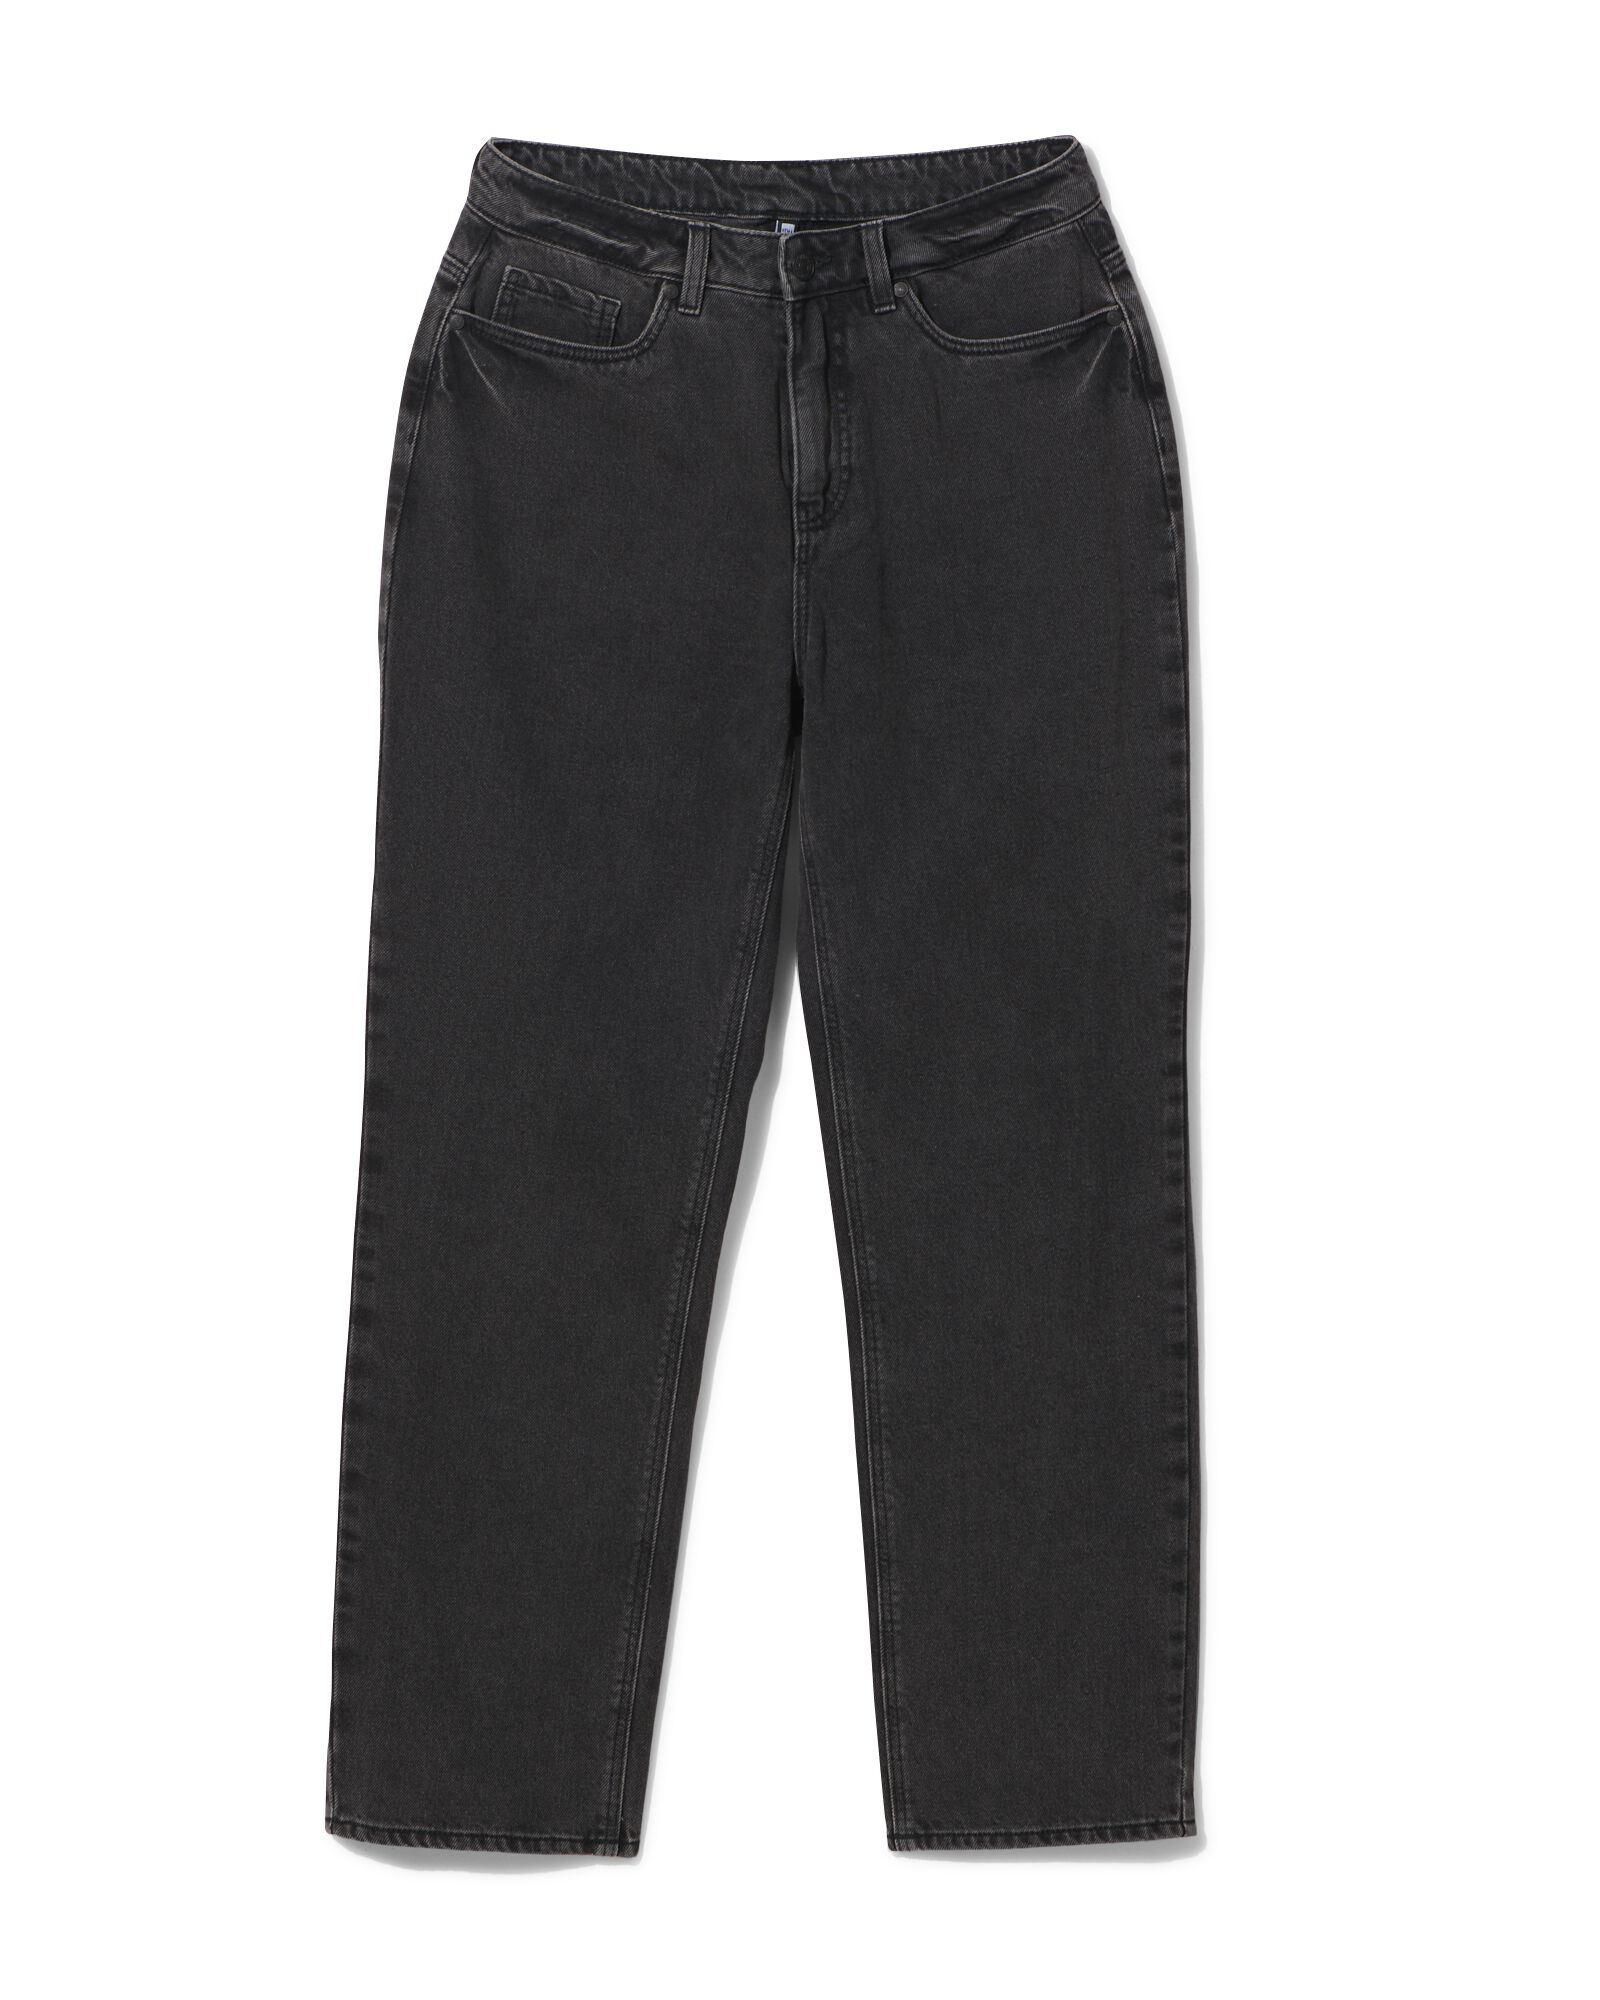 Damen-Jeans, Straight Fit dunkelgrau 44 - 36319985 - HEMA